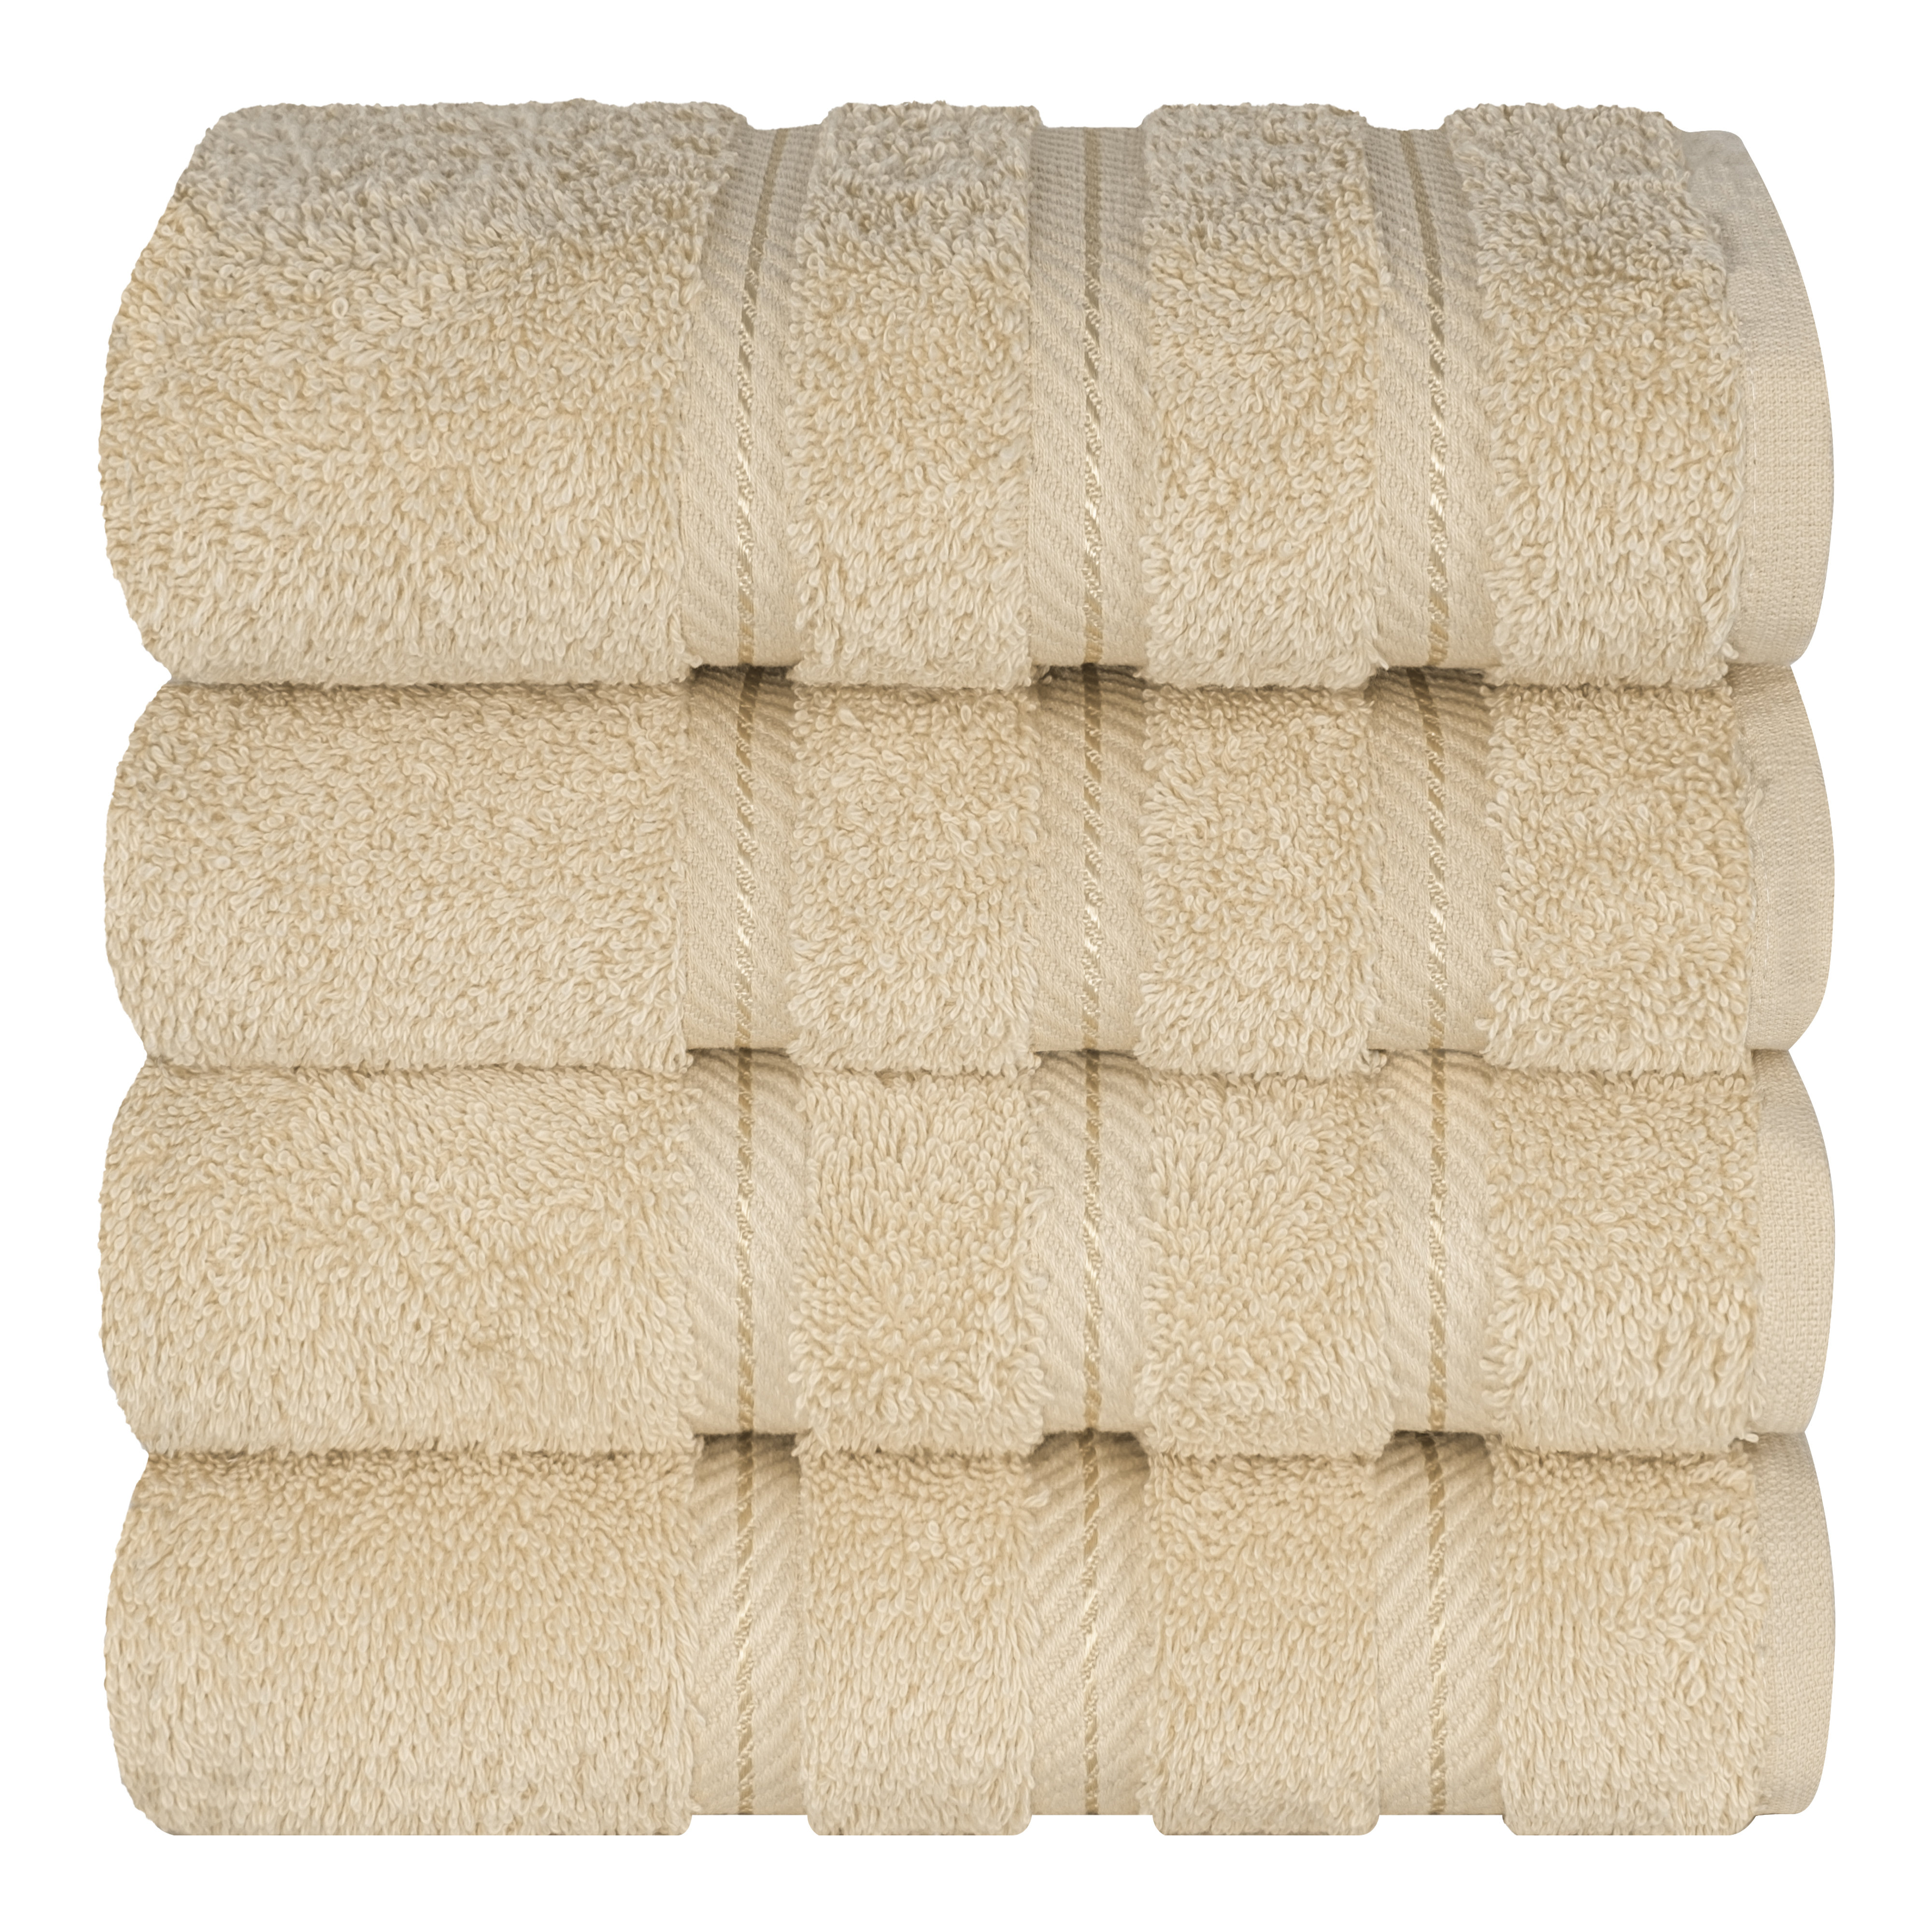 American Soft Linen 4 Piece 100% Turkish Cotton Hand Towel Set - Rockridge Gray